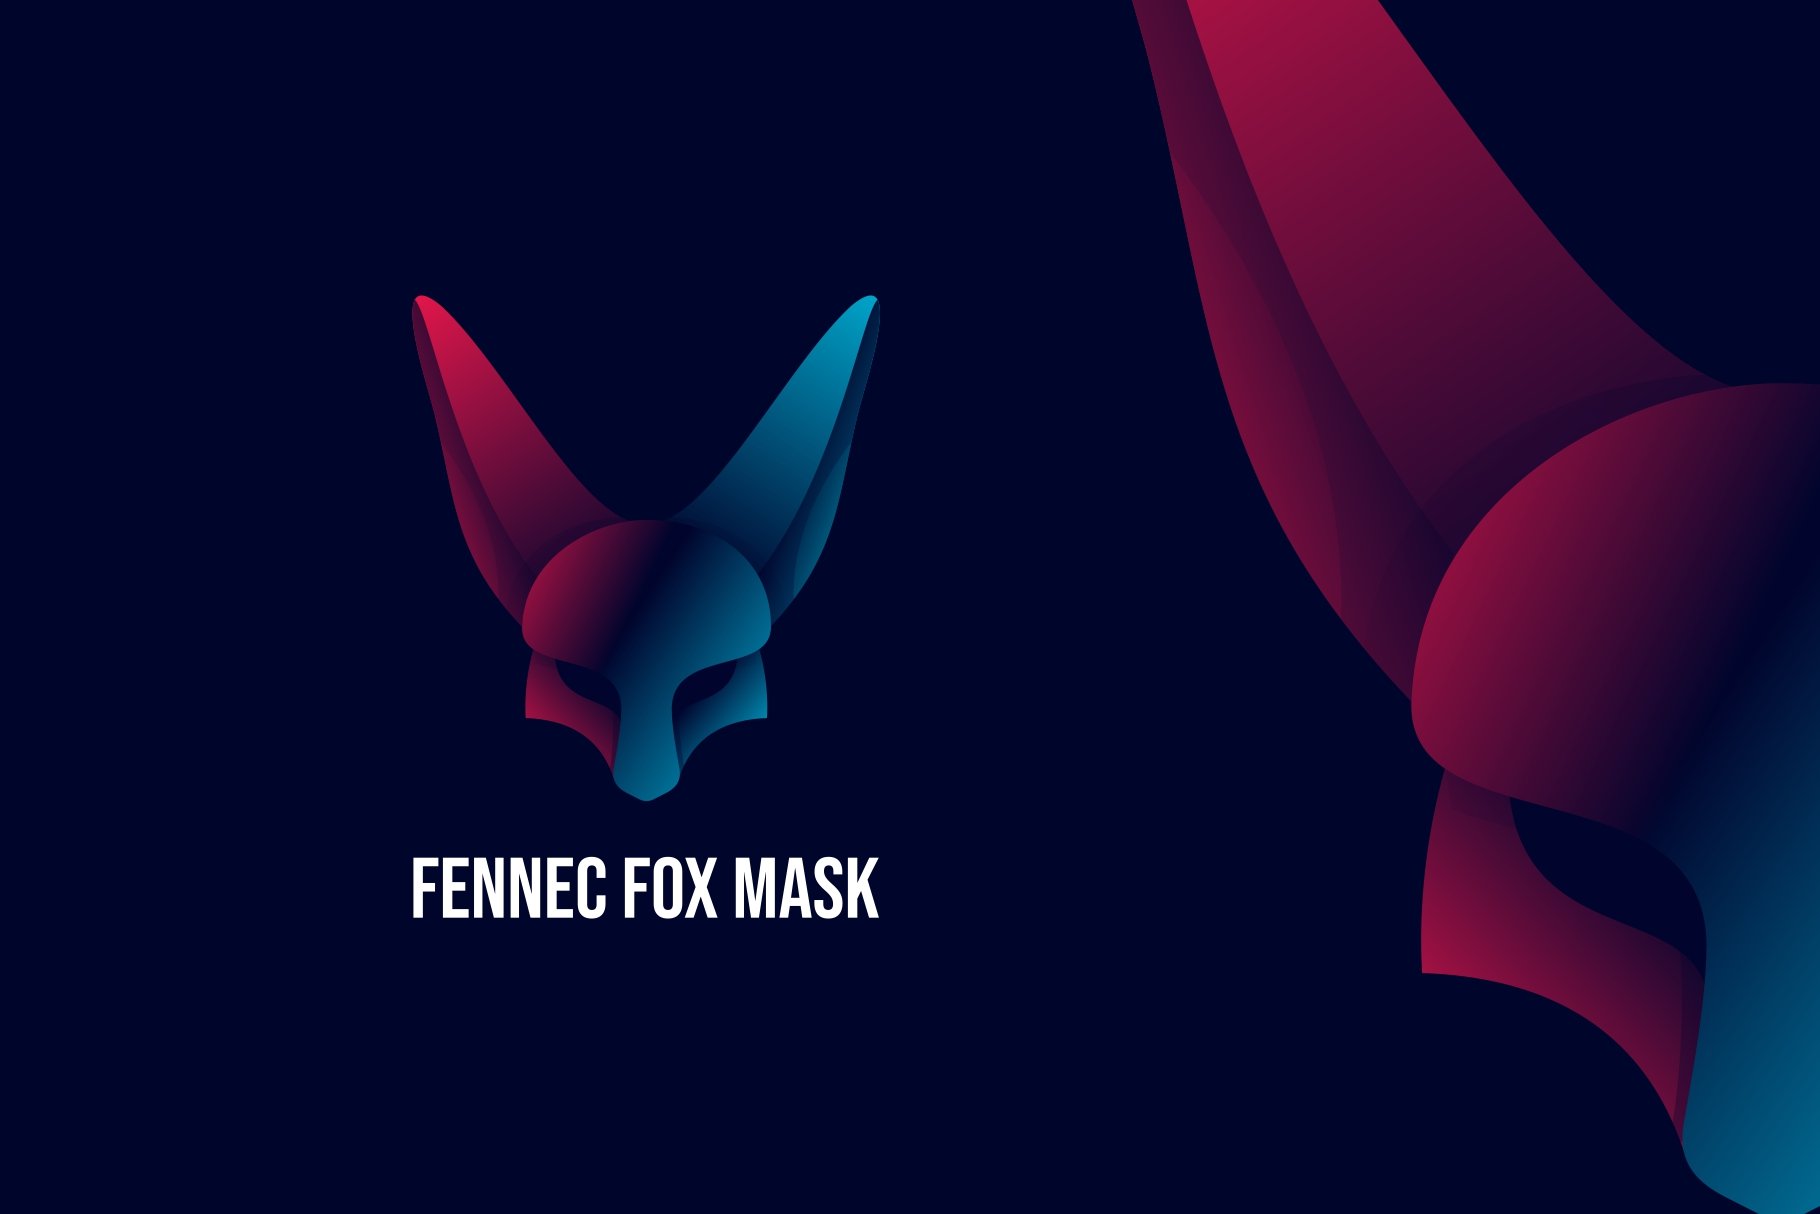 Fennec Fox Gradient Logo cover image.